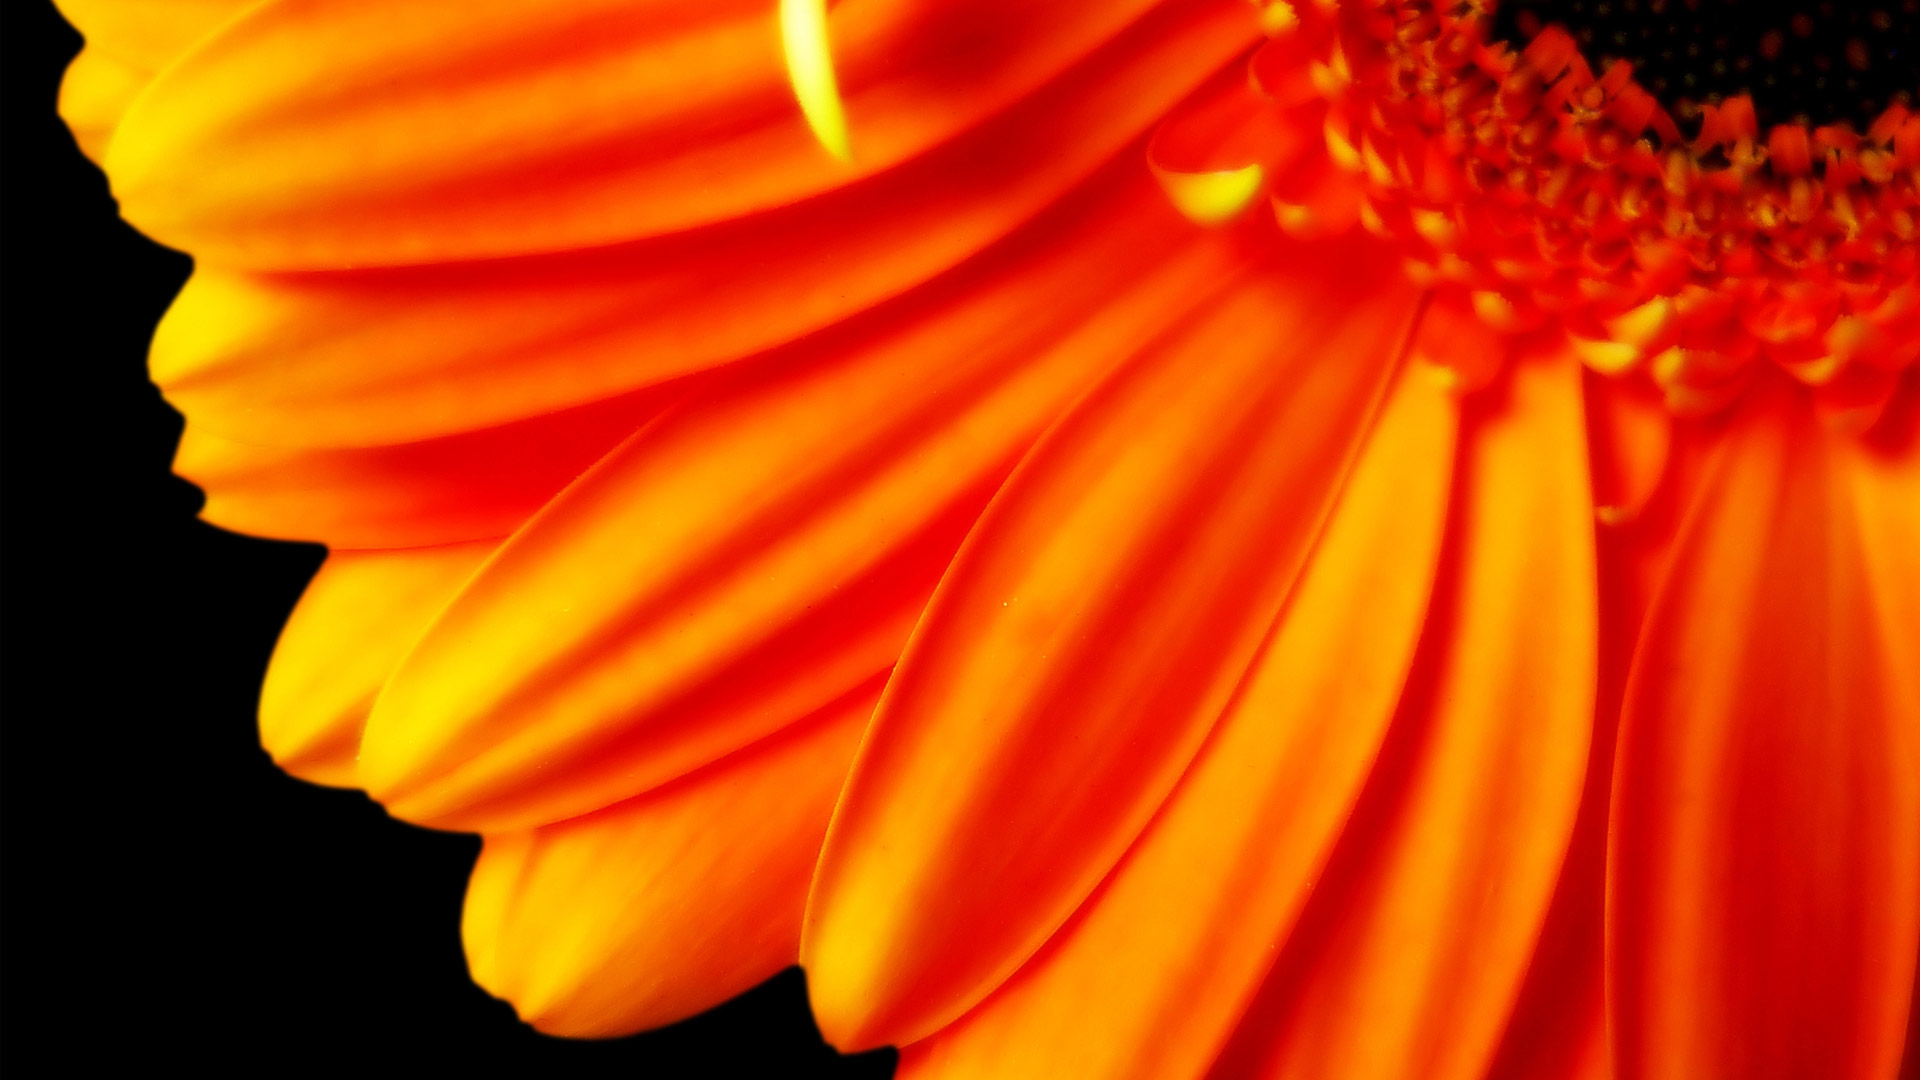 HD Wallpaper Flowers 1080p Image Gallery